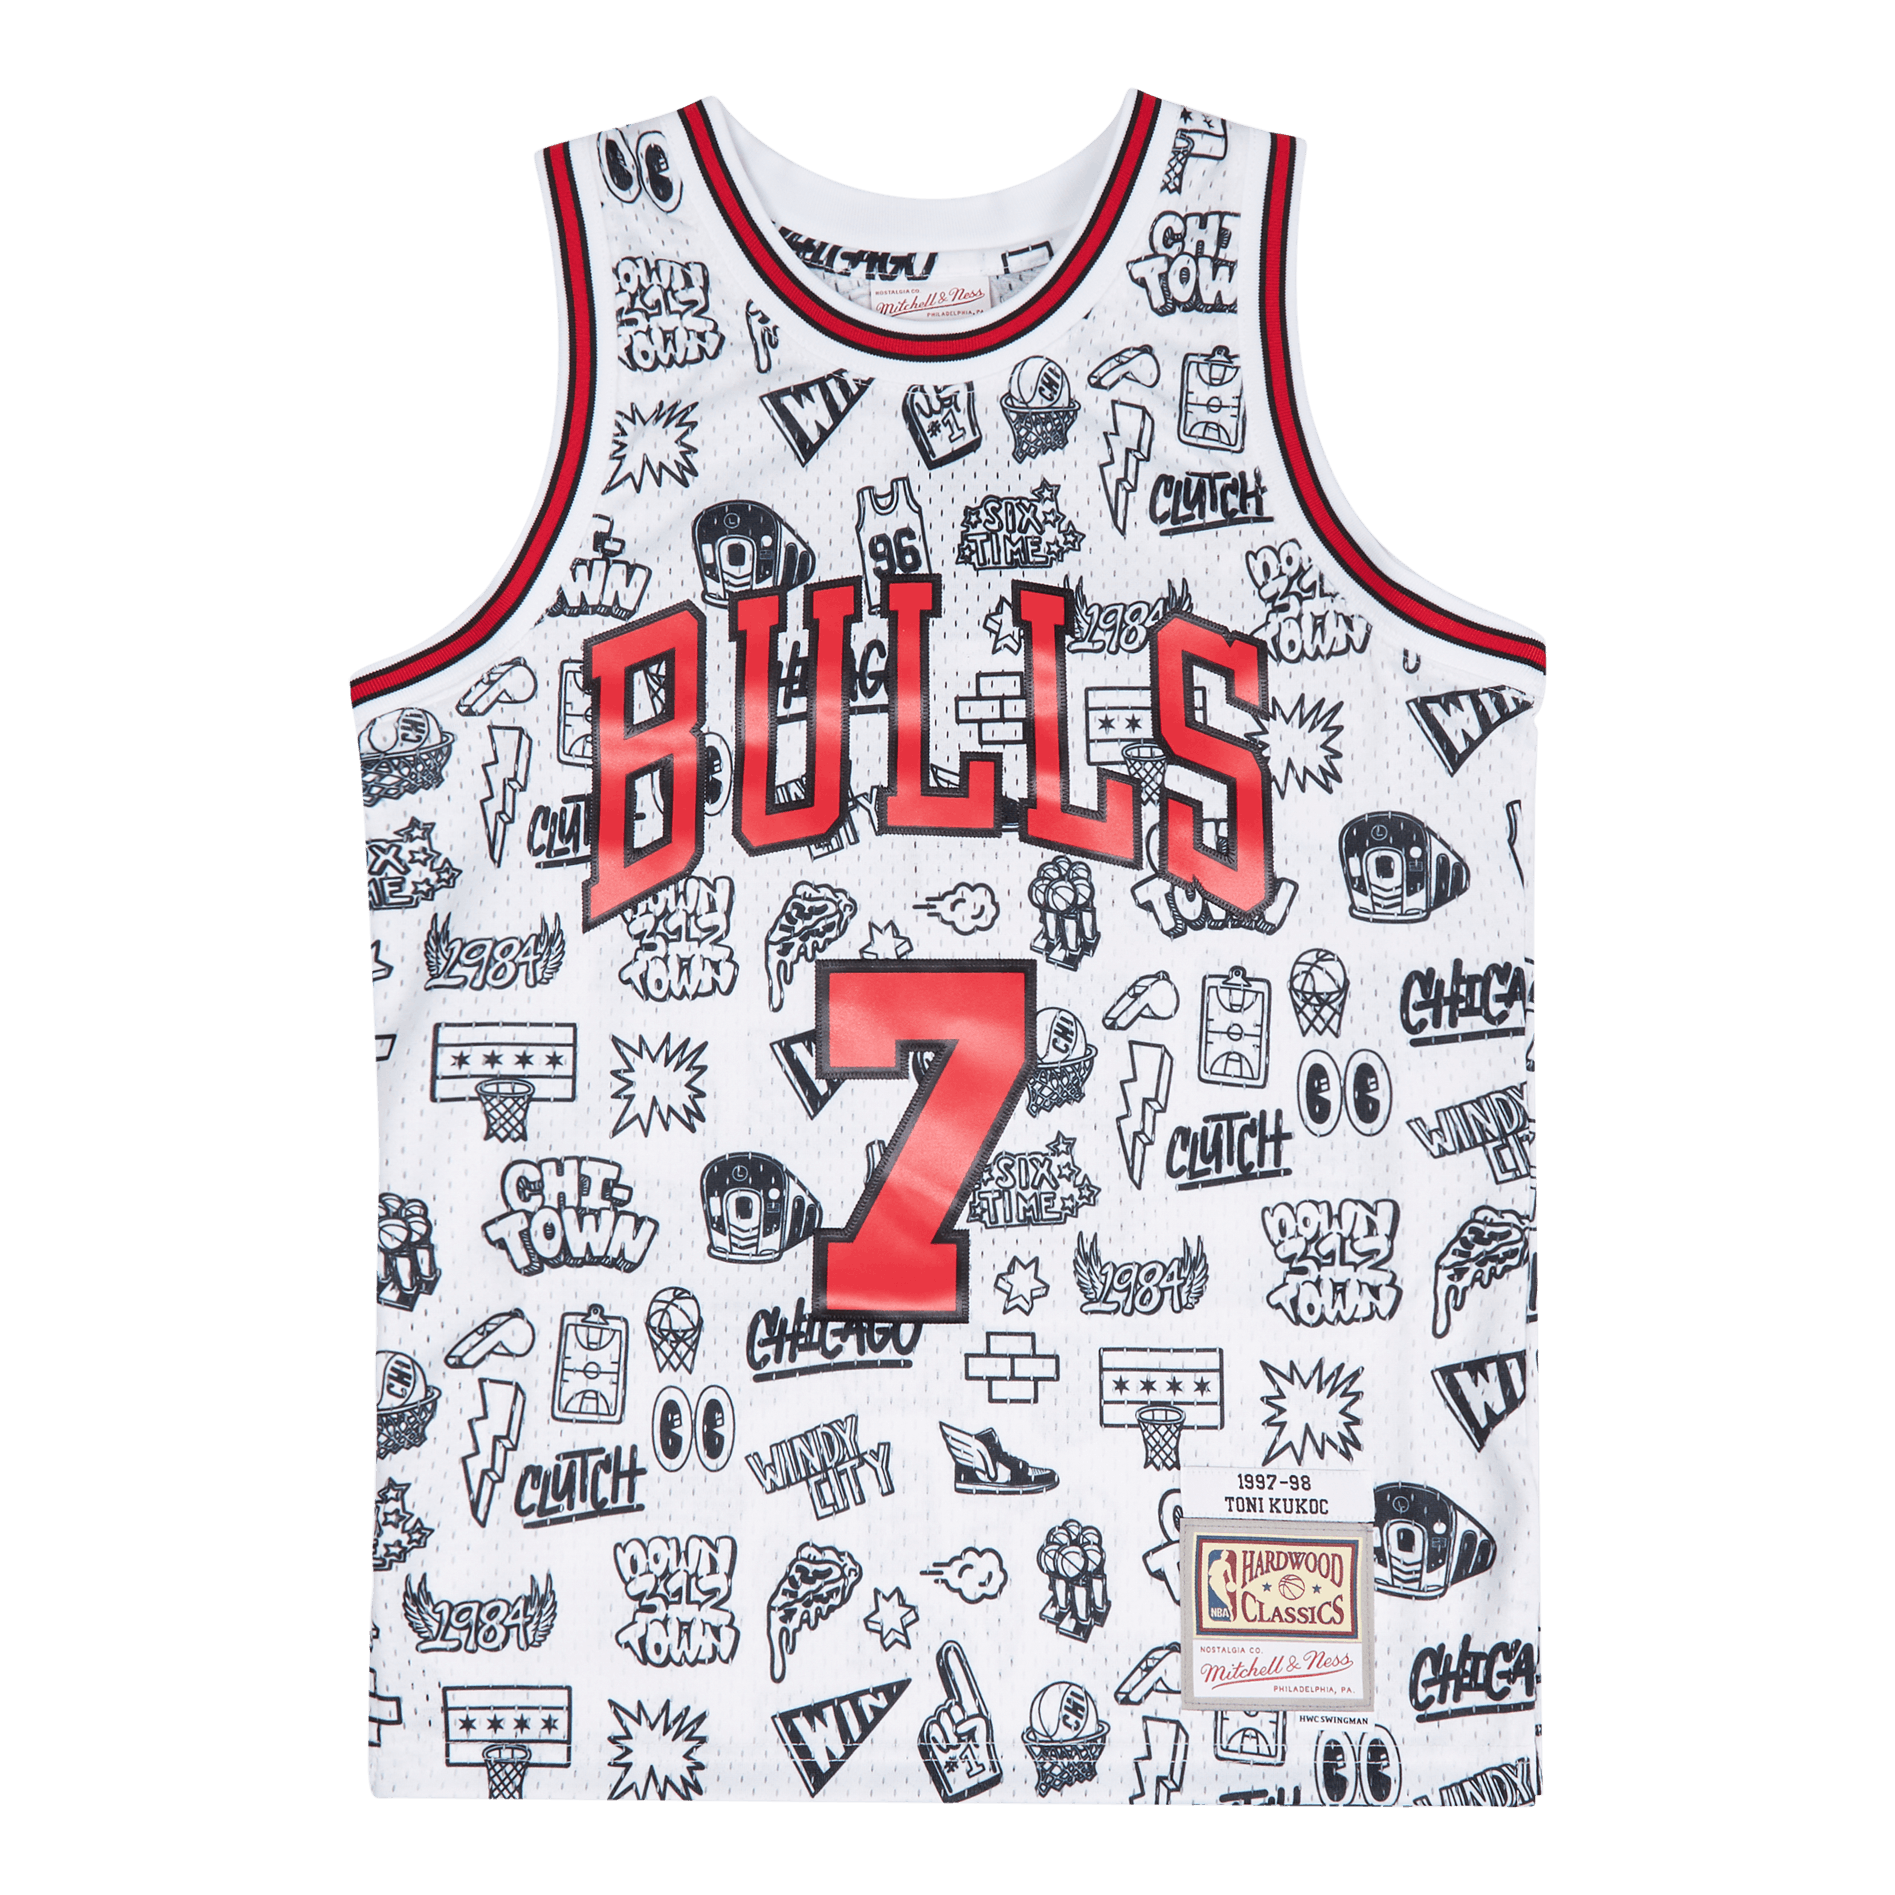 Mitchell & Ness Chicago Bulls #7 Toni Kukoc black Swingman Jersey